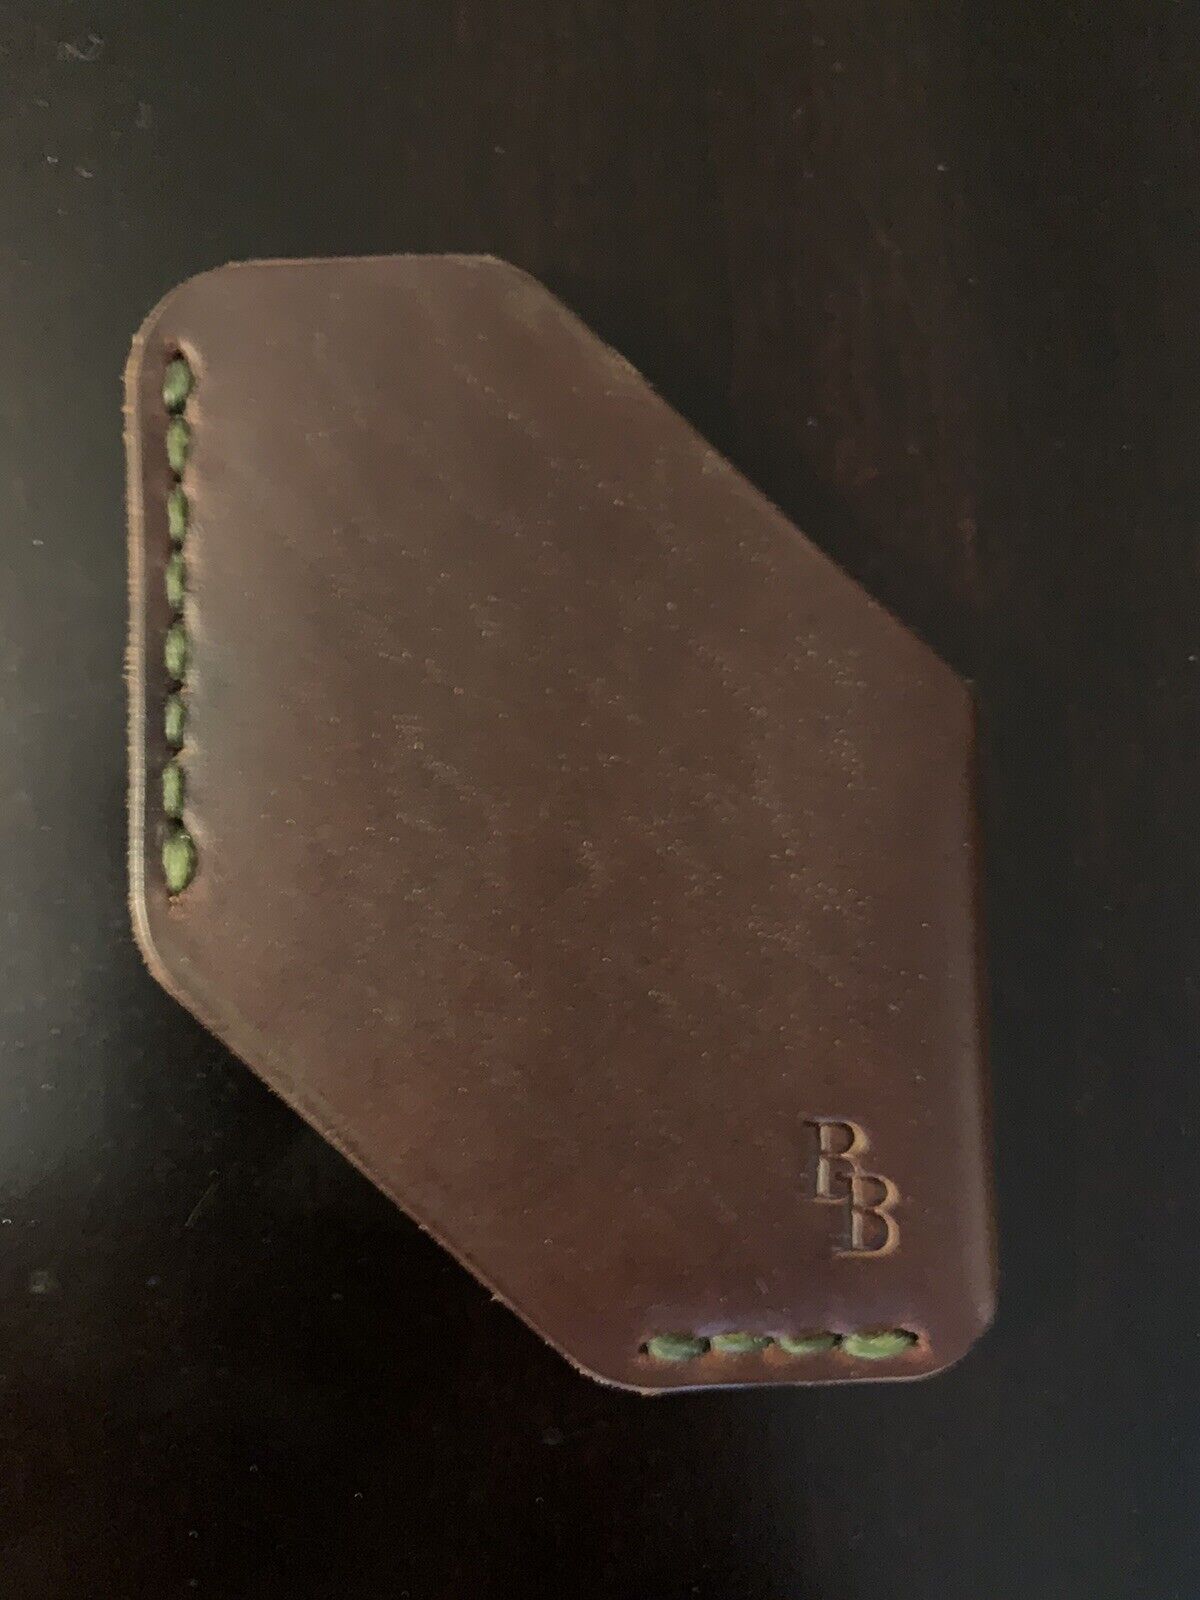 NEW Benjamin Bott Leather Goods Card and Cash Holster Wallet Dark Brown Olive